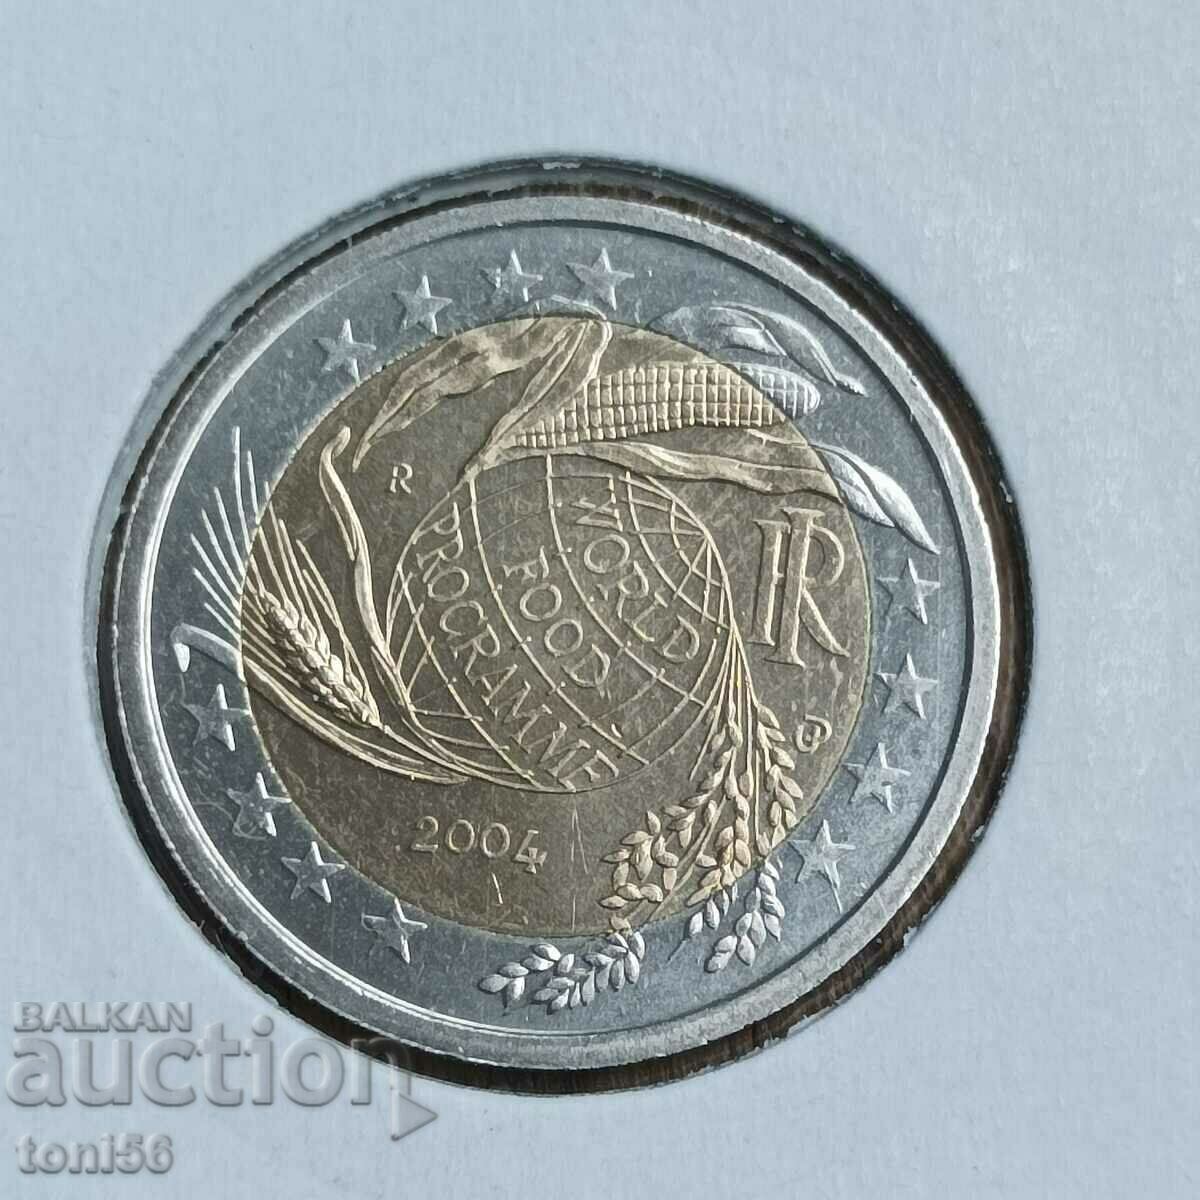 Italy 2 euro 2004 - FAO